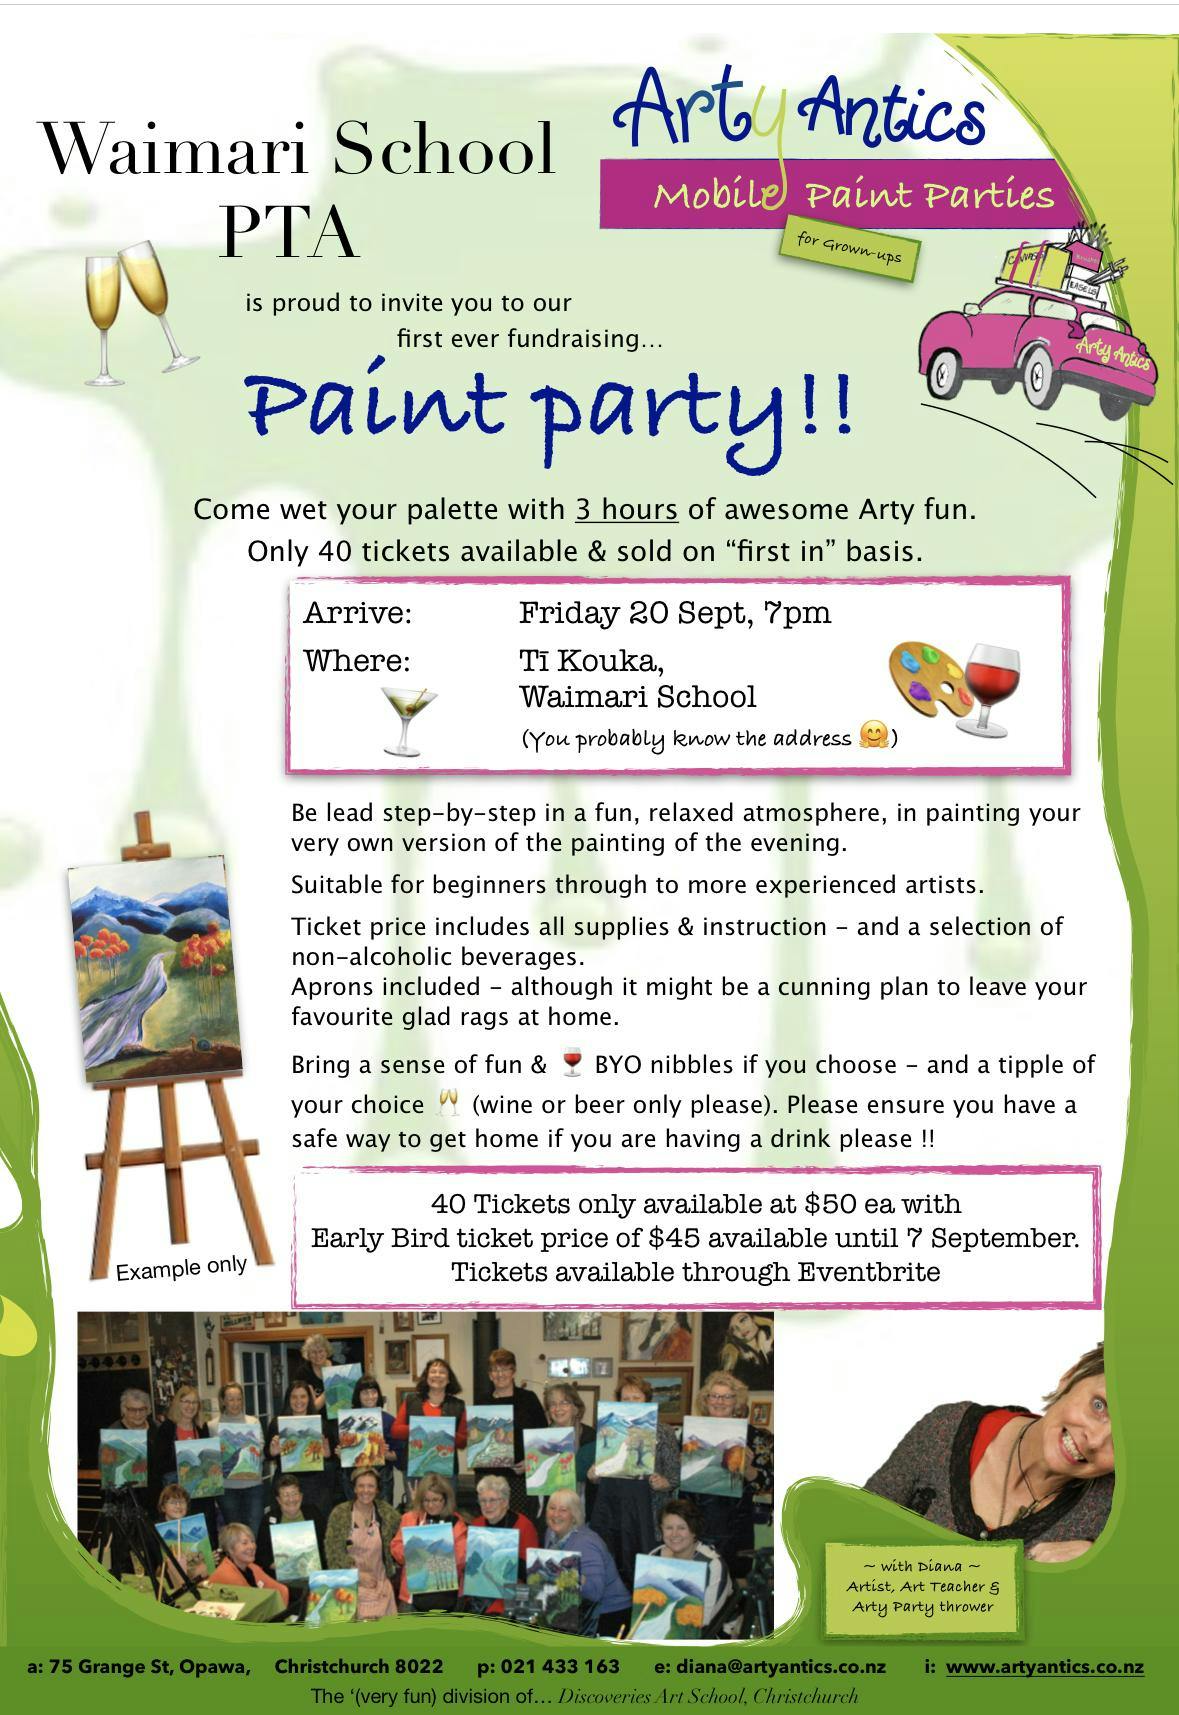 Waimairi School Arty Antics Paint Party